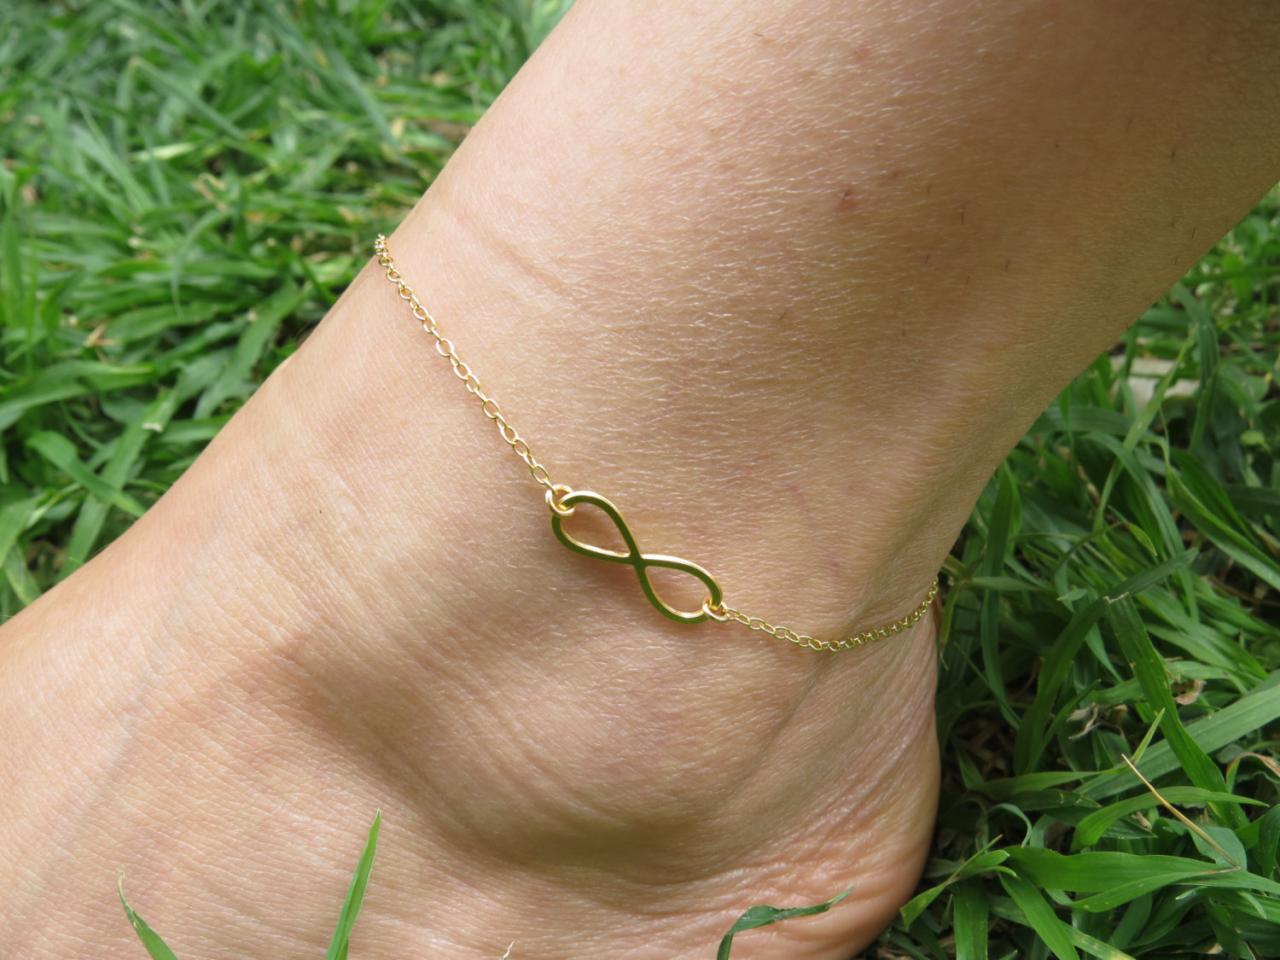 Anklet Bracelet, Gold Ankle, Infinity Anklet, Delicate Gold Anklet, Gold Infinity Bracelet, Everyday Jewelry, Charm Anklet